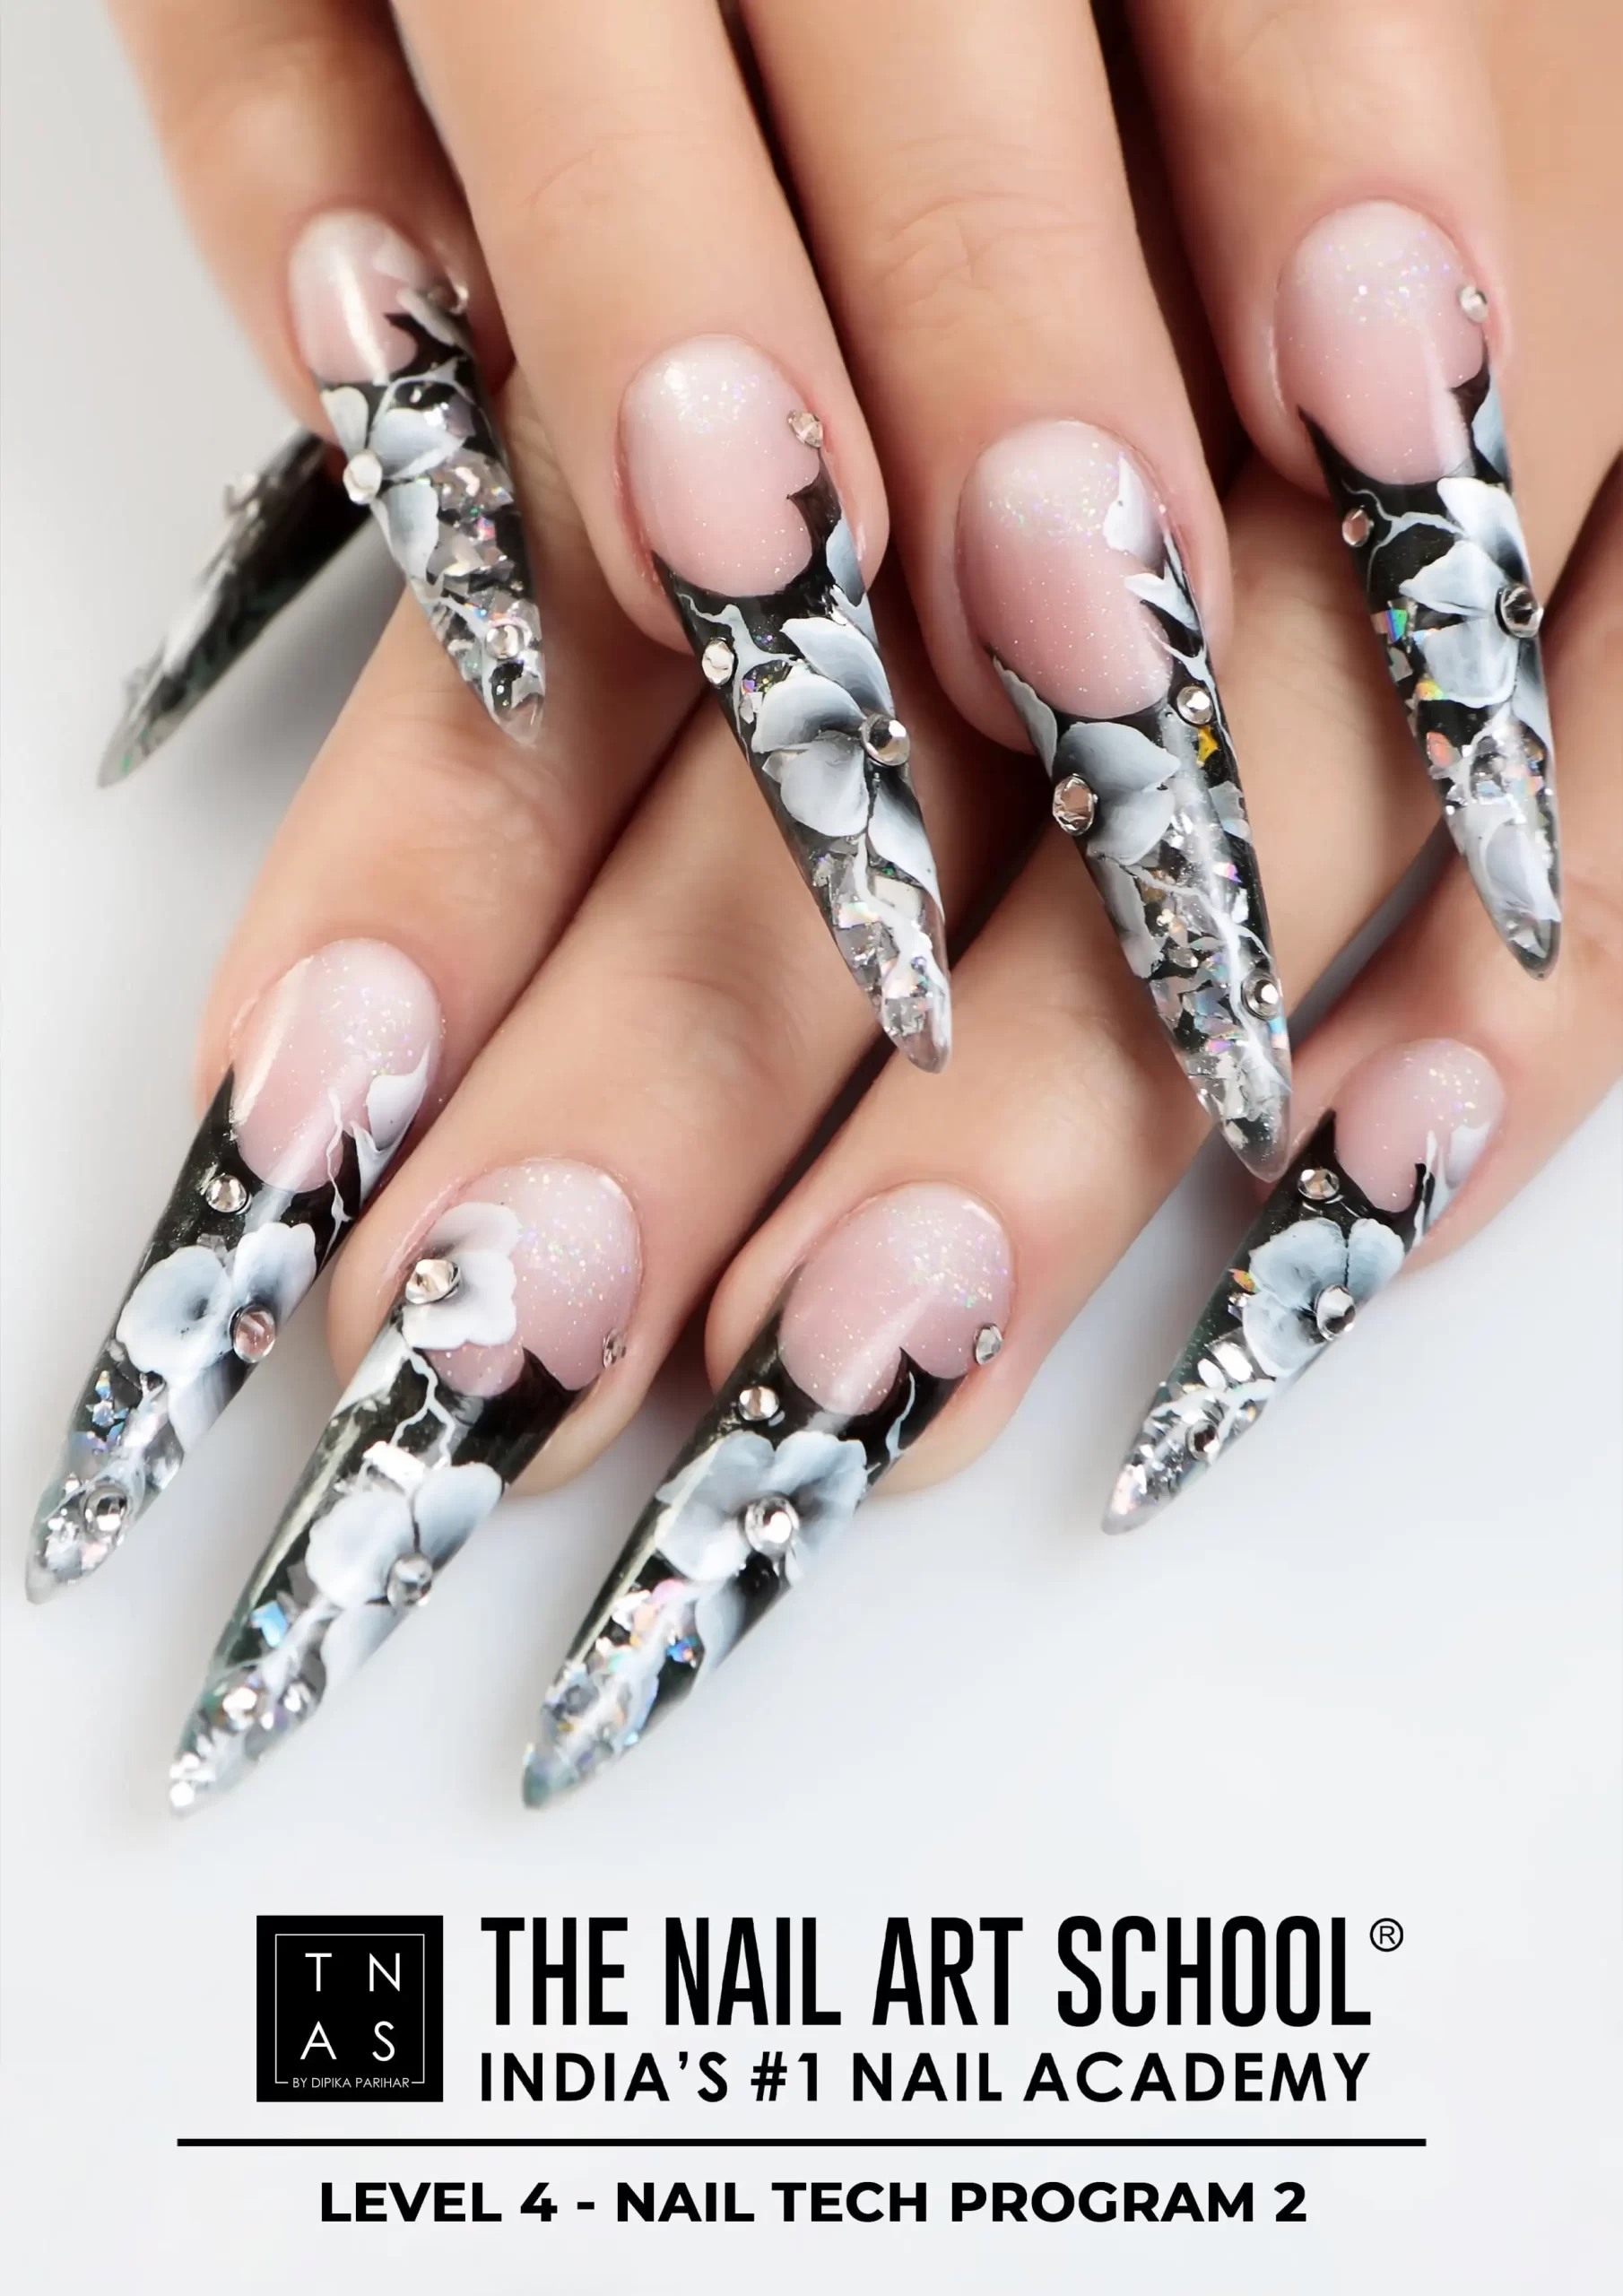 deep nail spa & academy / Near Inorbit mall/ Nail art academy in Malad West  - Nail Salon & Nail Academy in Malad West .